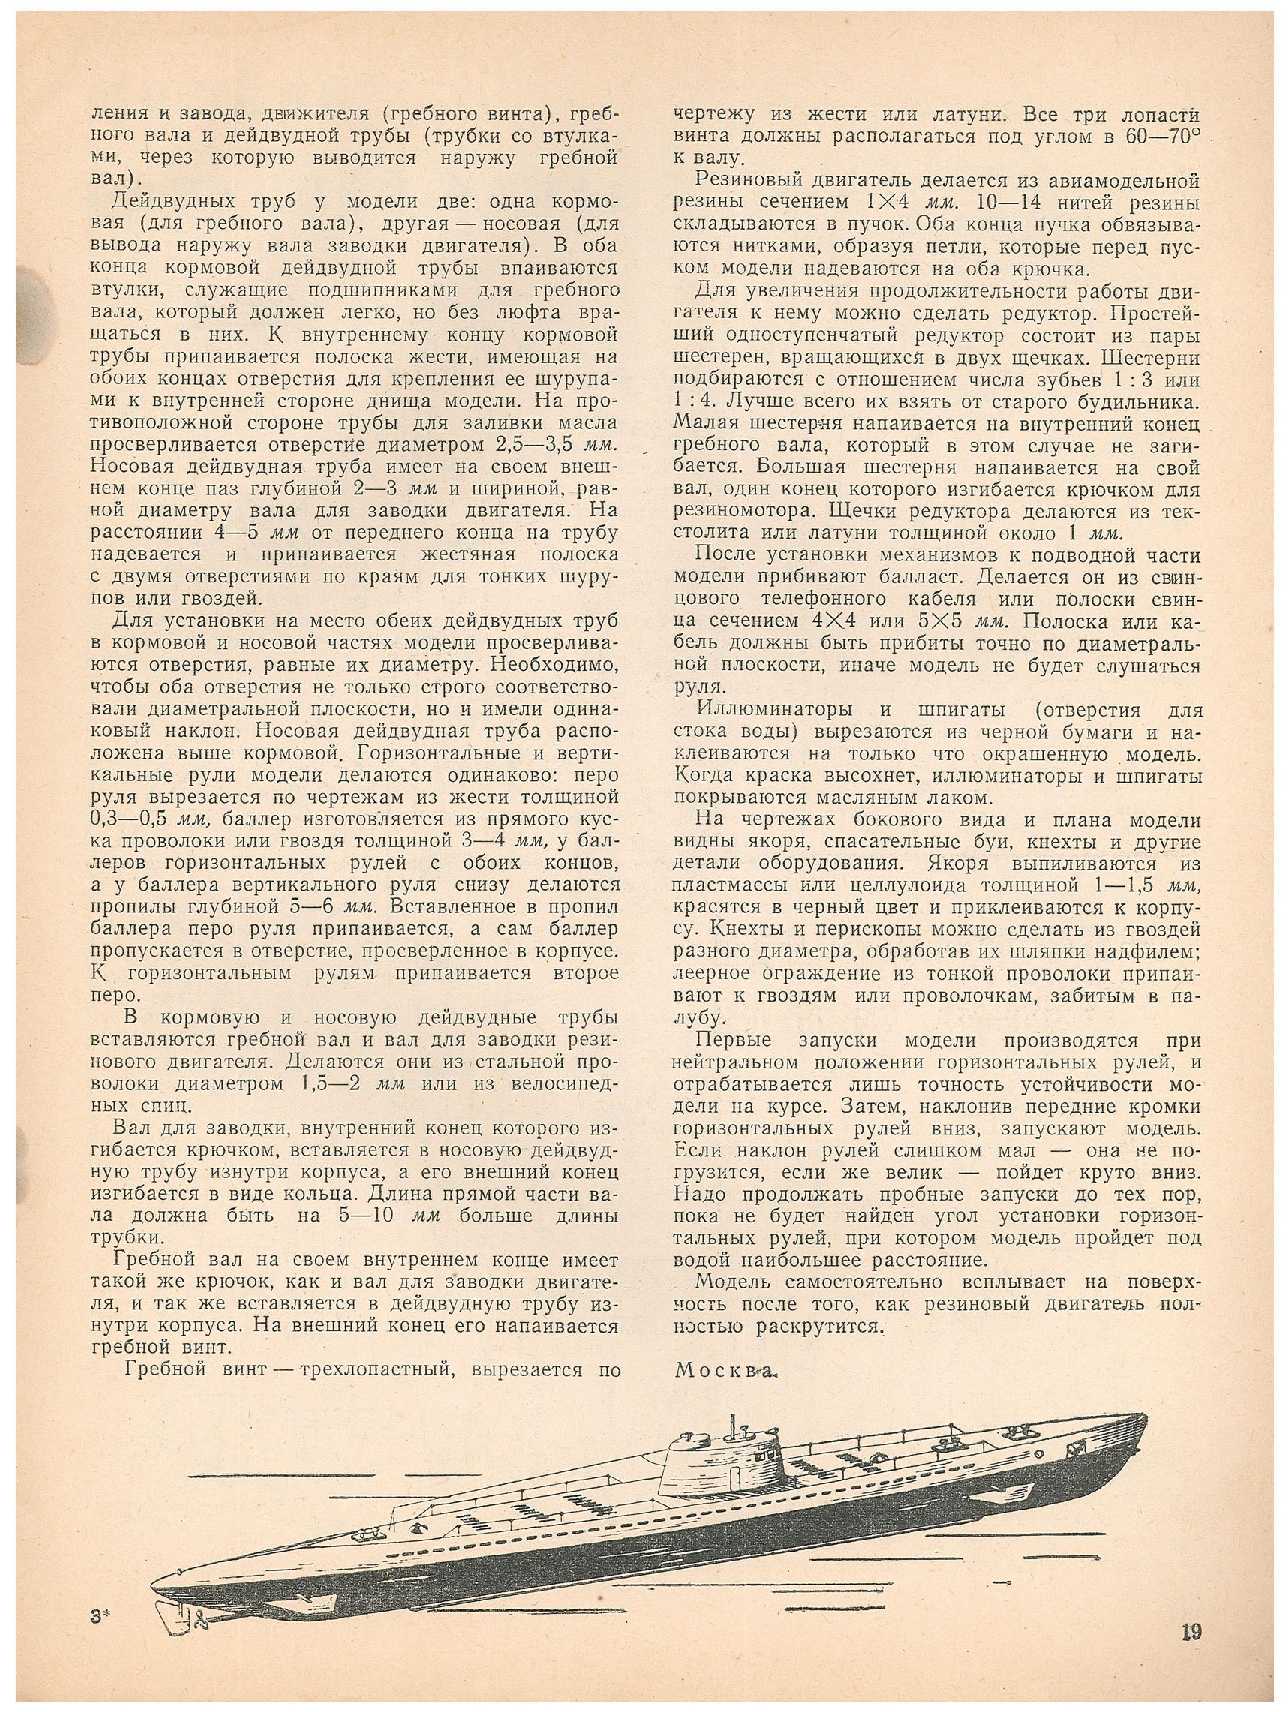 ЮМК 2, 1962, 19 c.